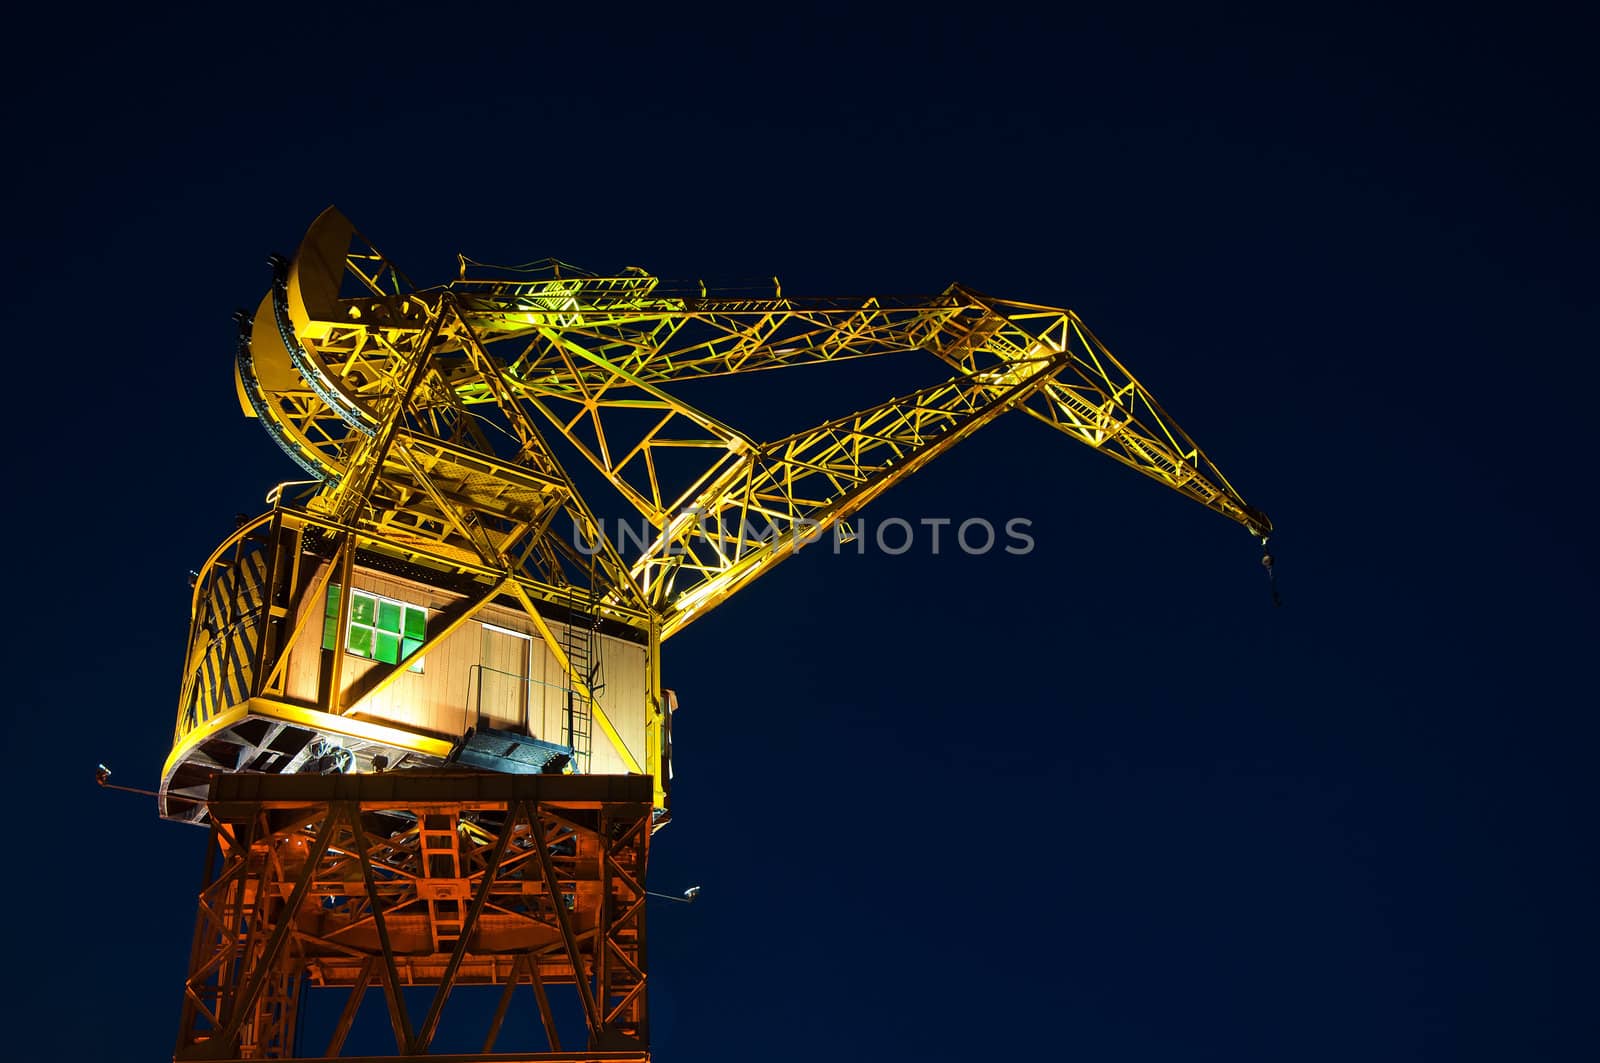 A yellow and orange crane seen at night.